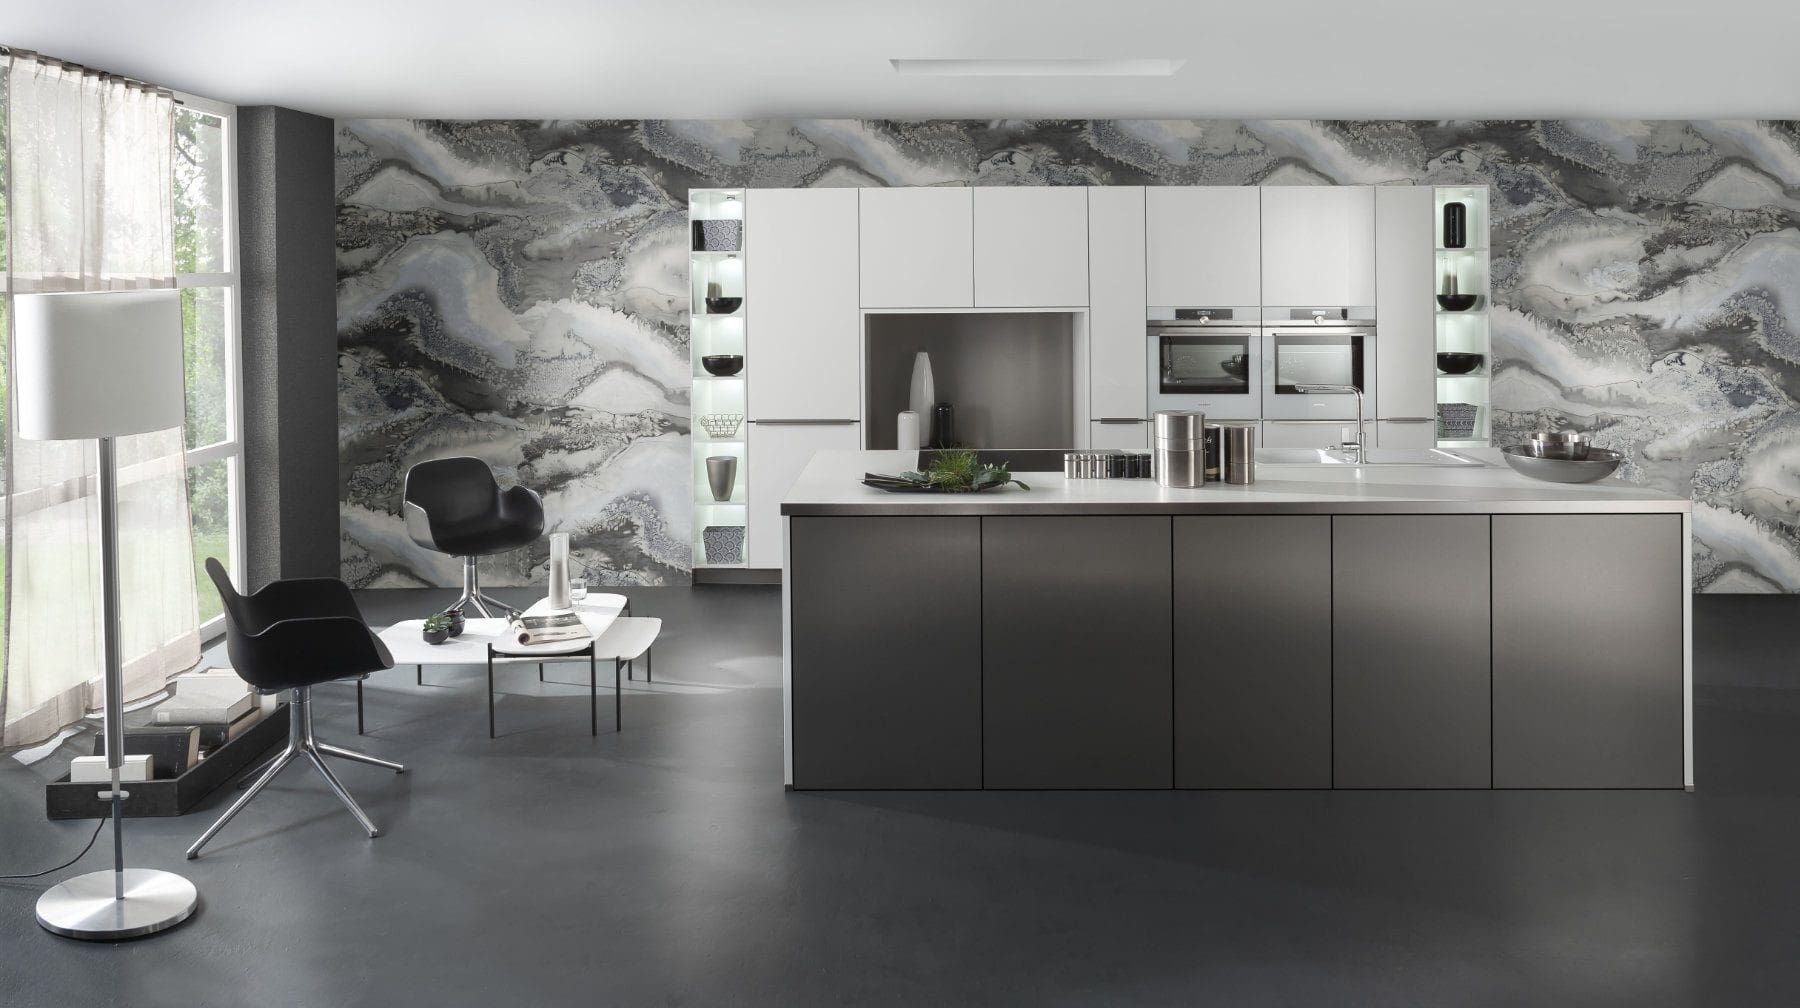 Bauformat Matt White Metallic Effect Kitchen With Island 1 | Rowe Fitted Interiors